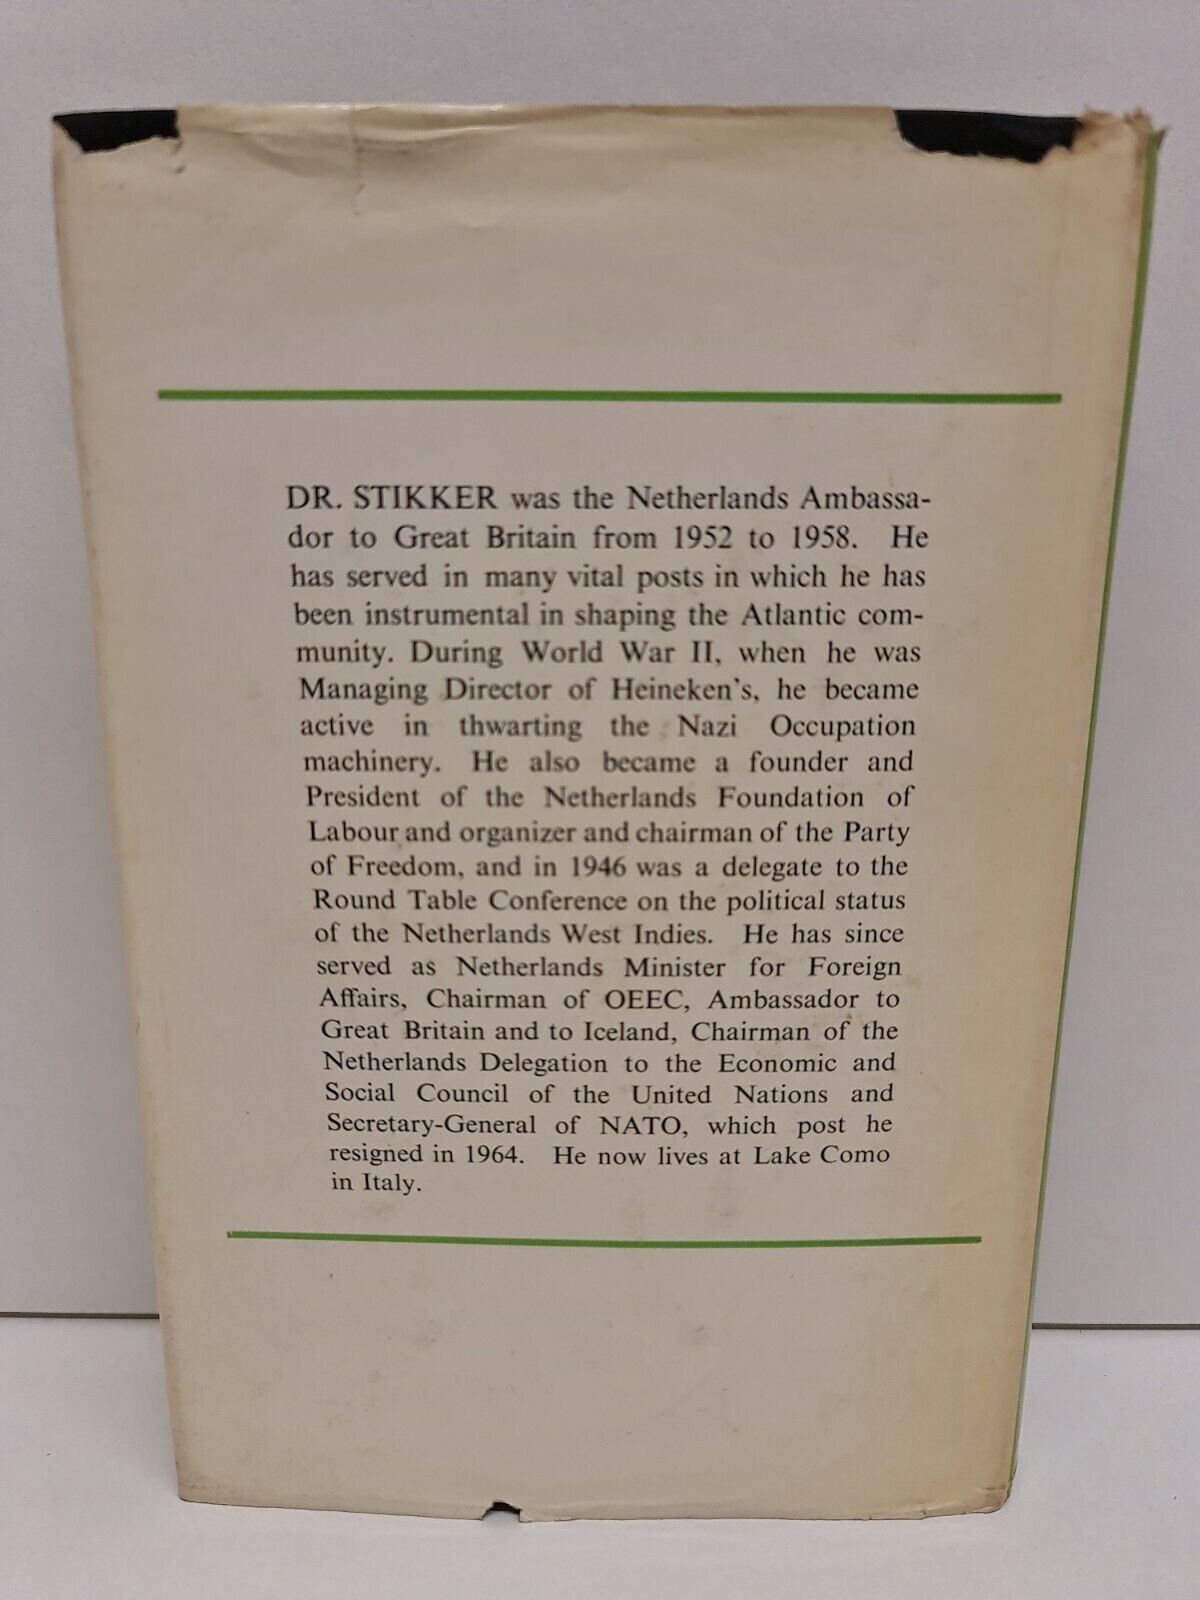 Men of Responsibility: A Memoir by Dirk Stikker (1966)